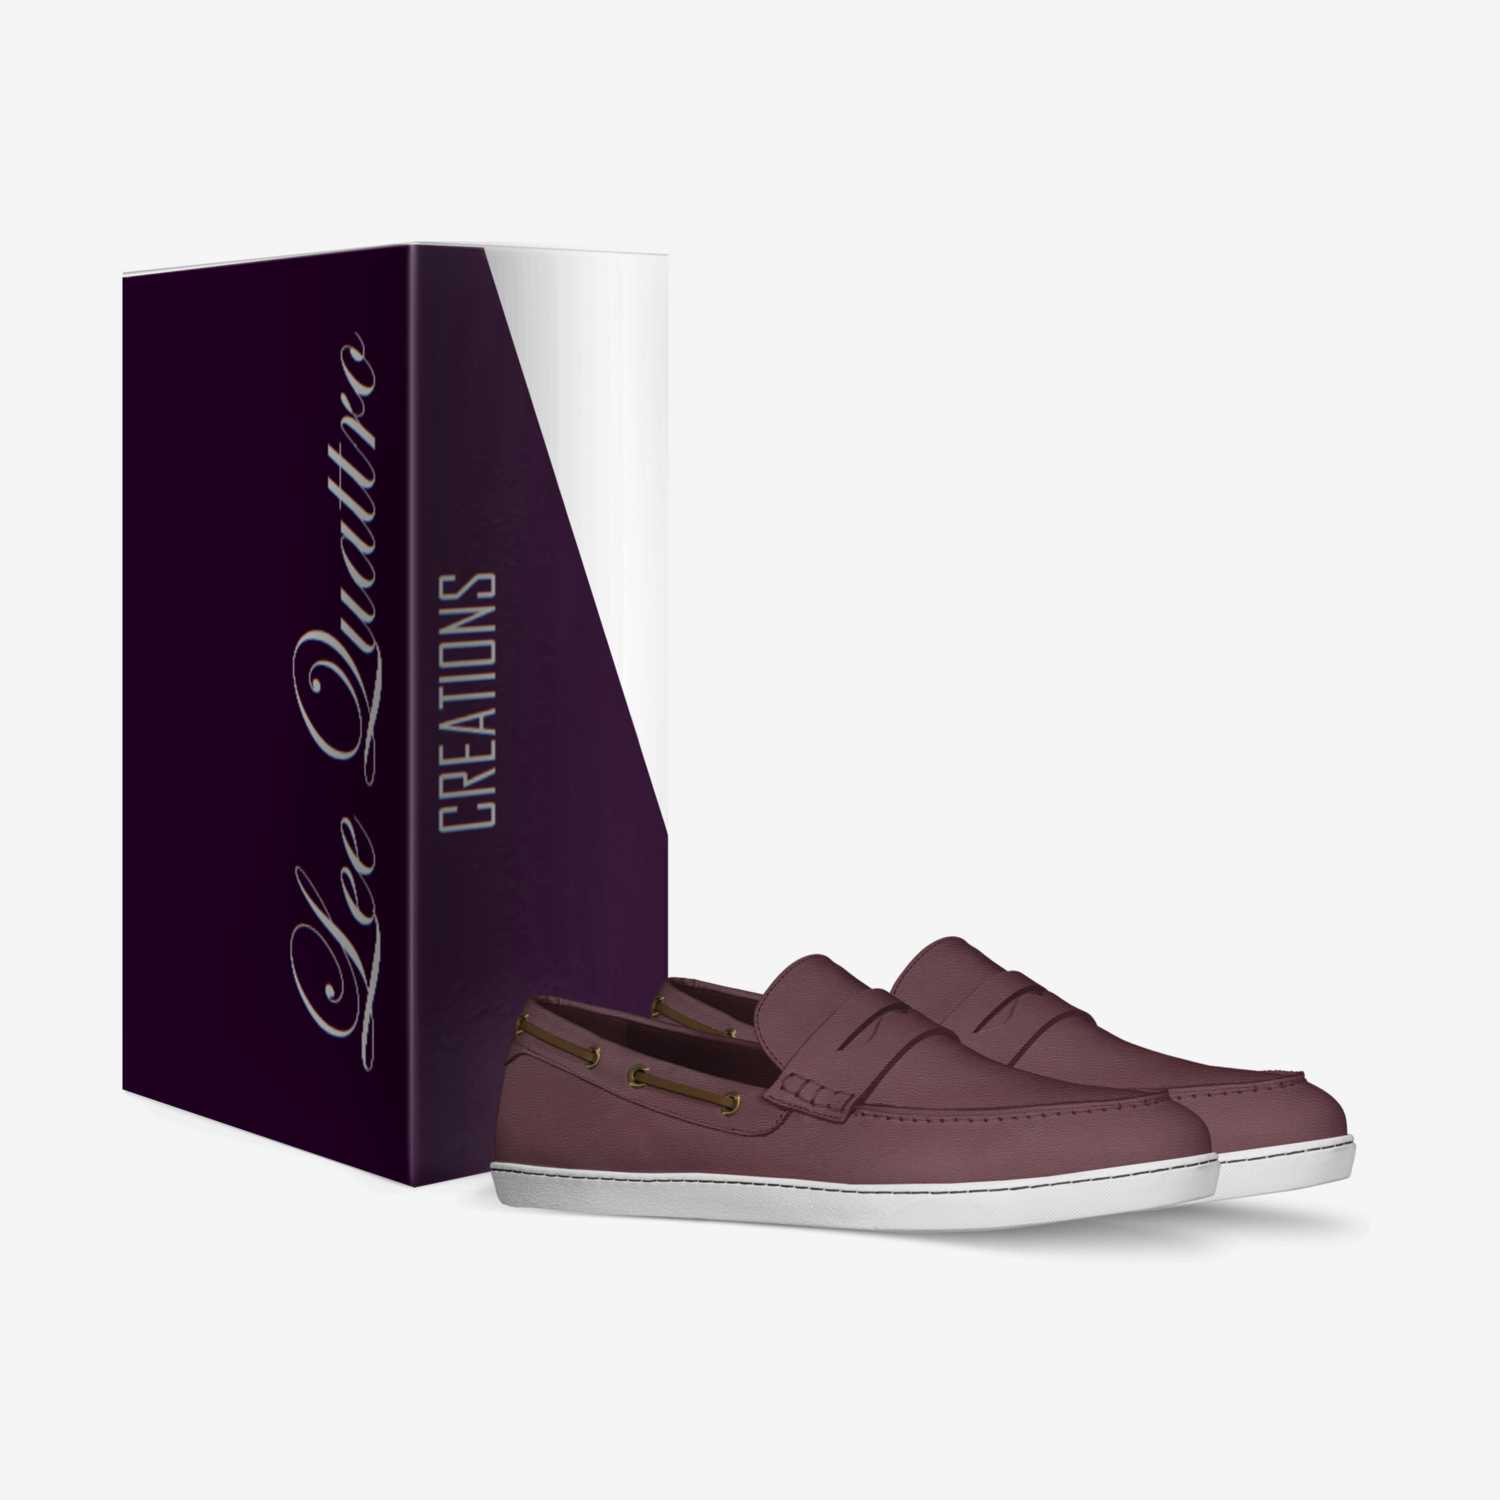 LQMANN custom made in Italy shoes by Takura M | Box view